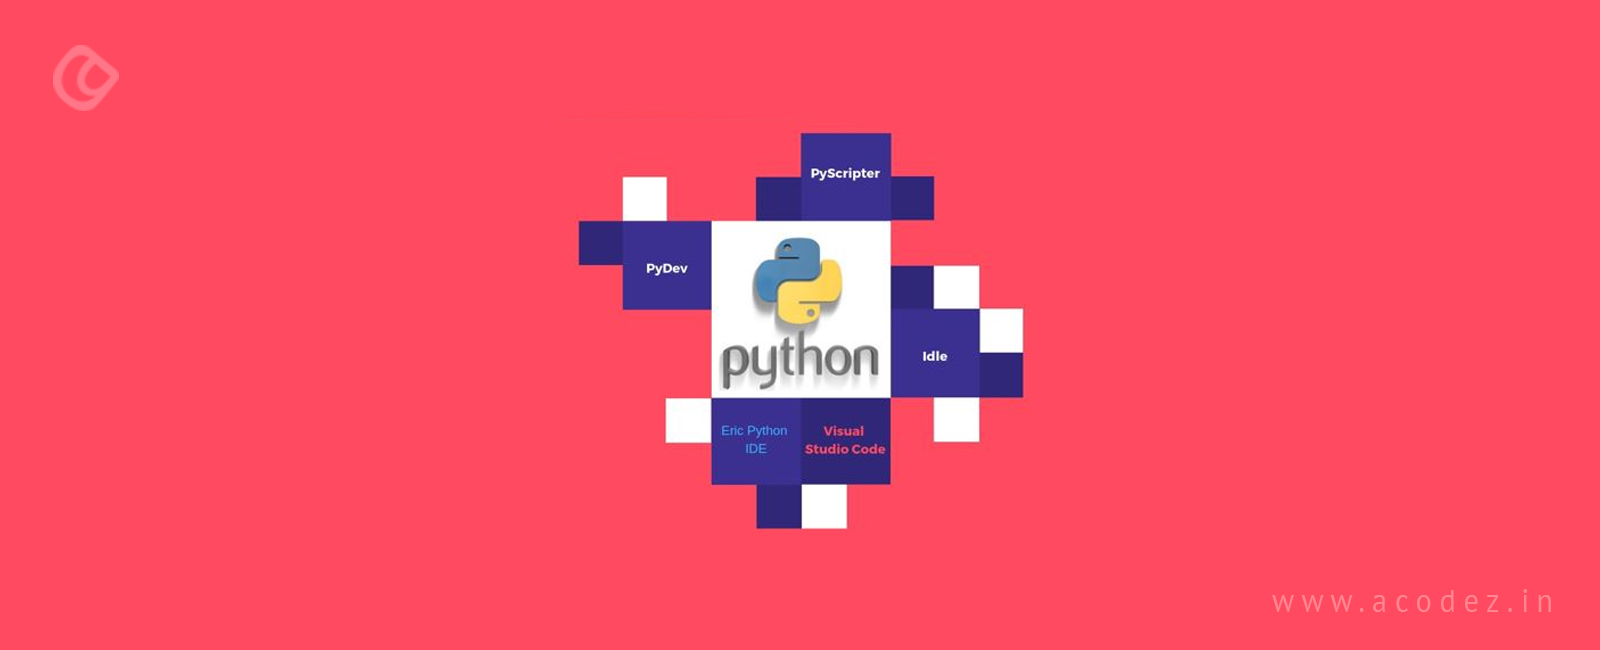 best python editor for mac os x